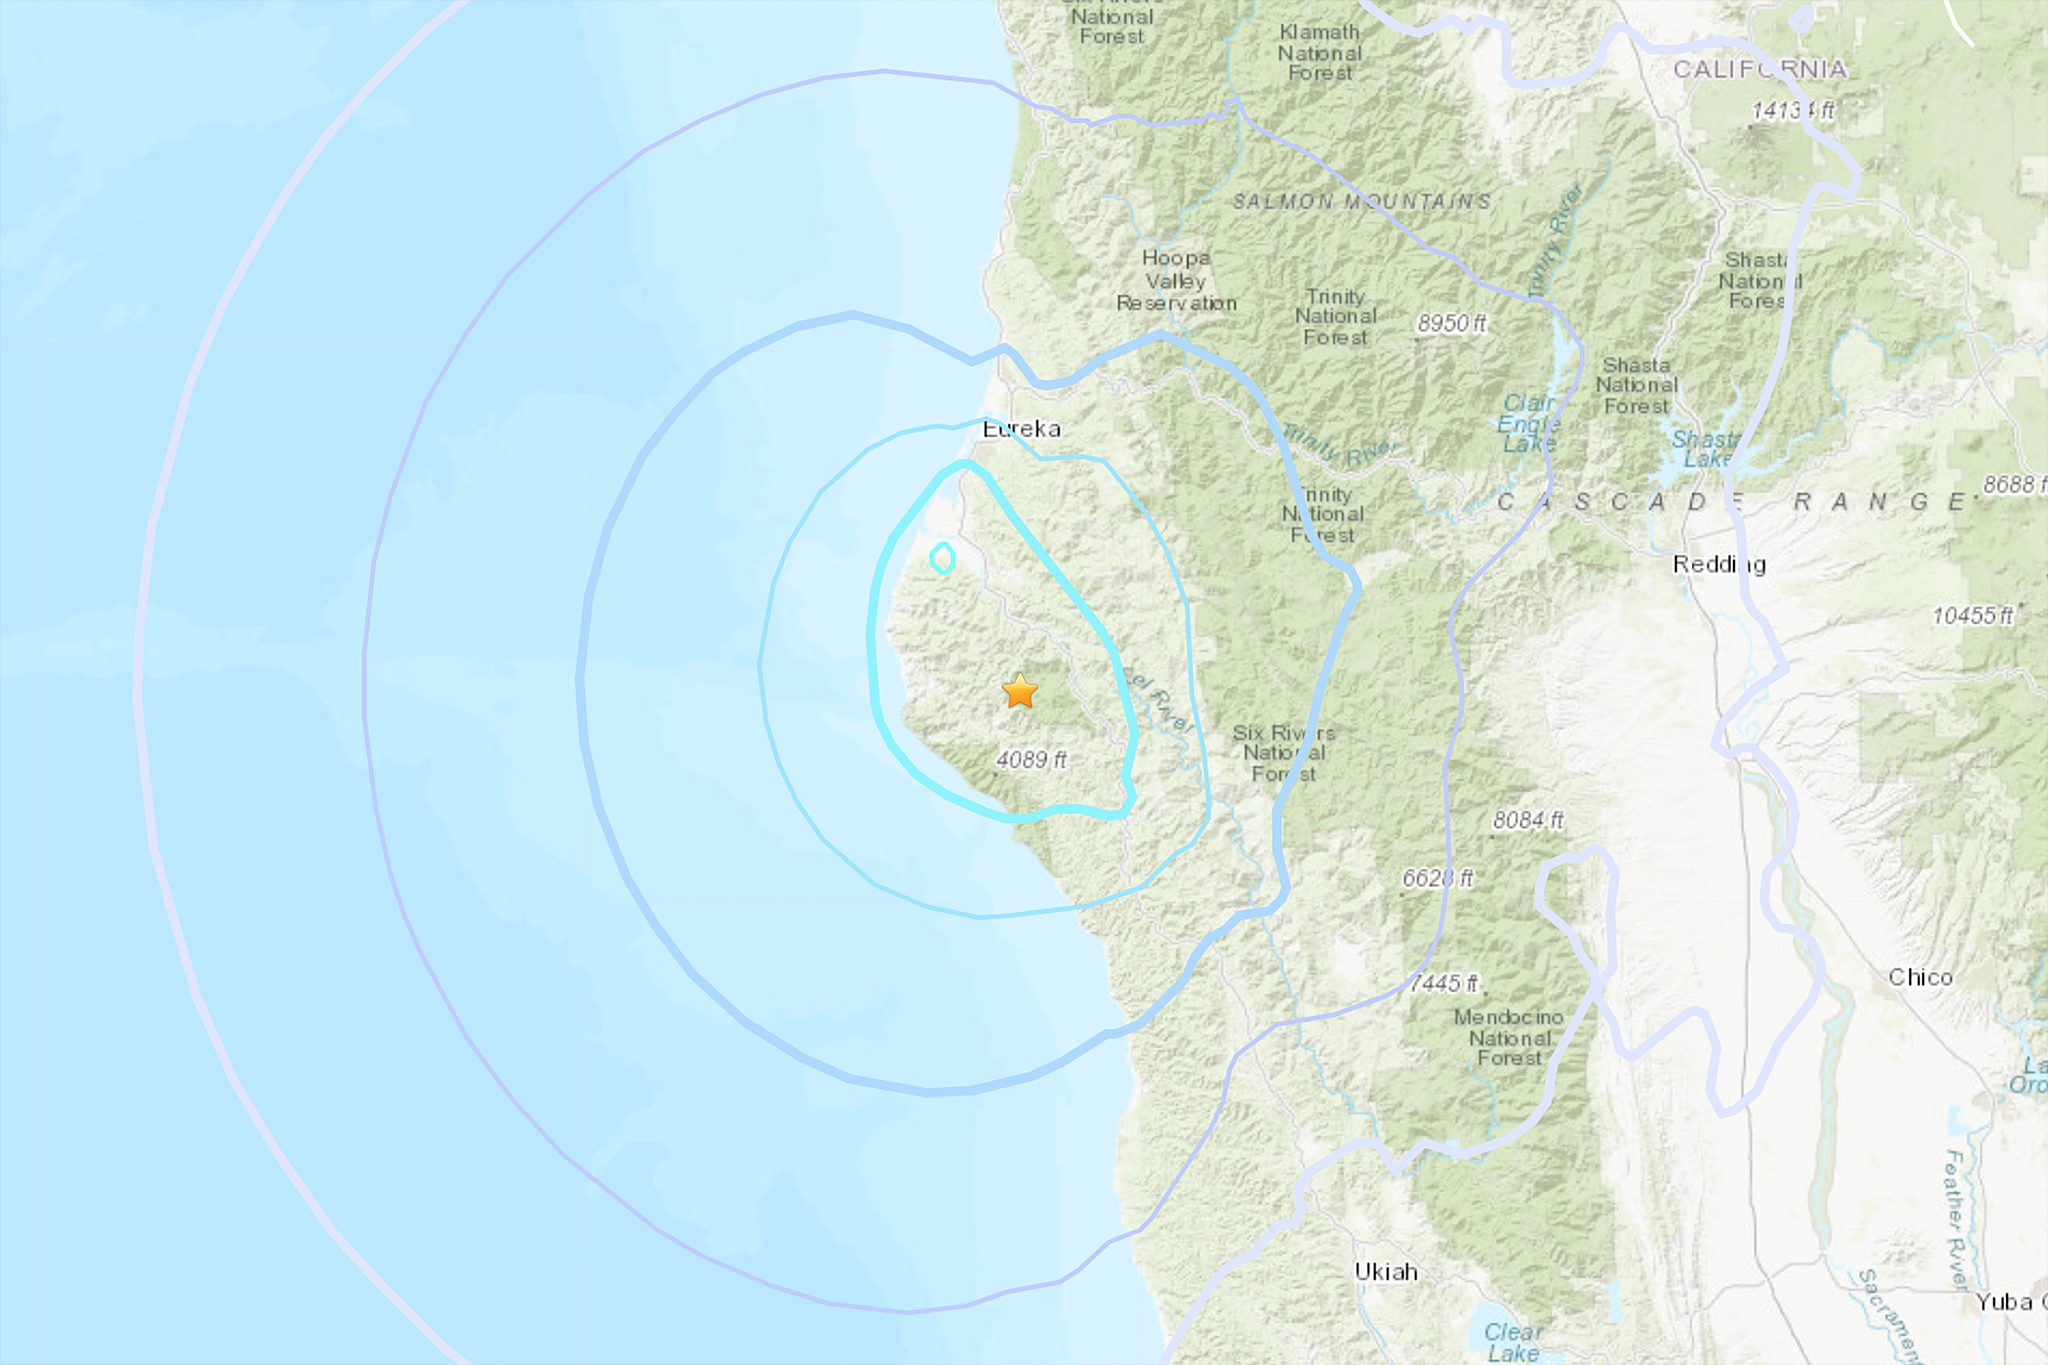 Magnitude 4.8 earthquake rattles Northern California